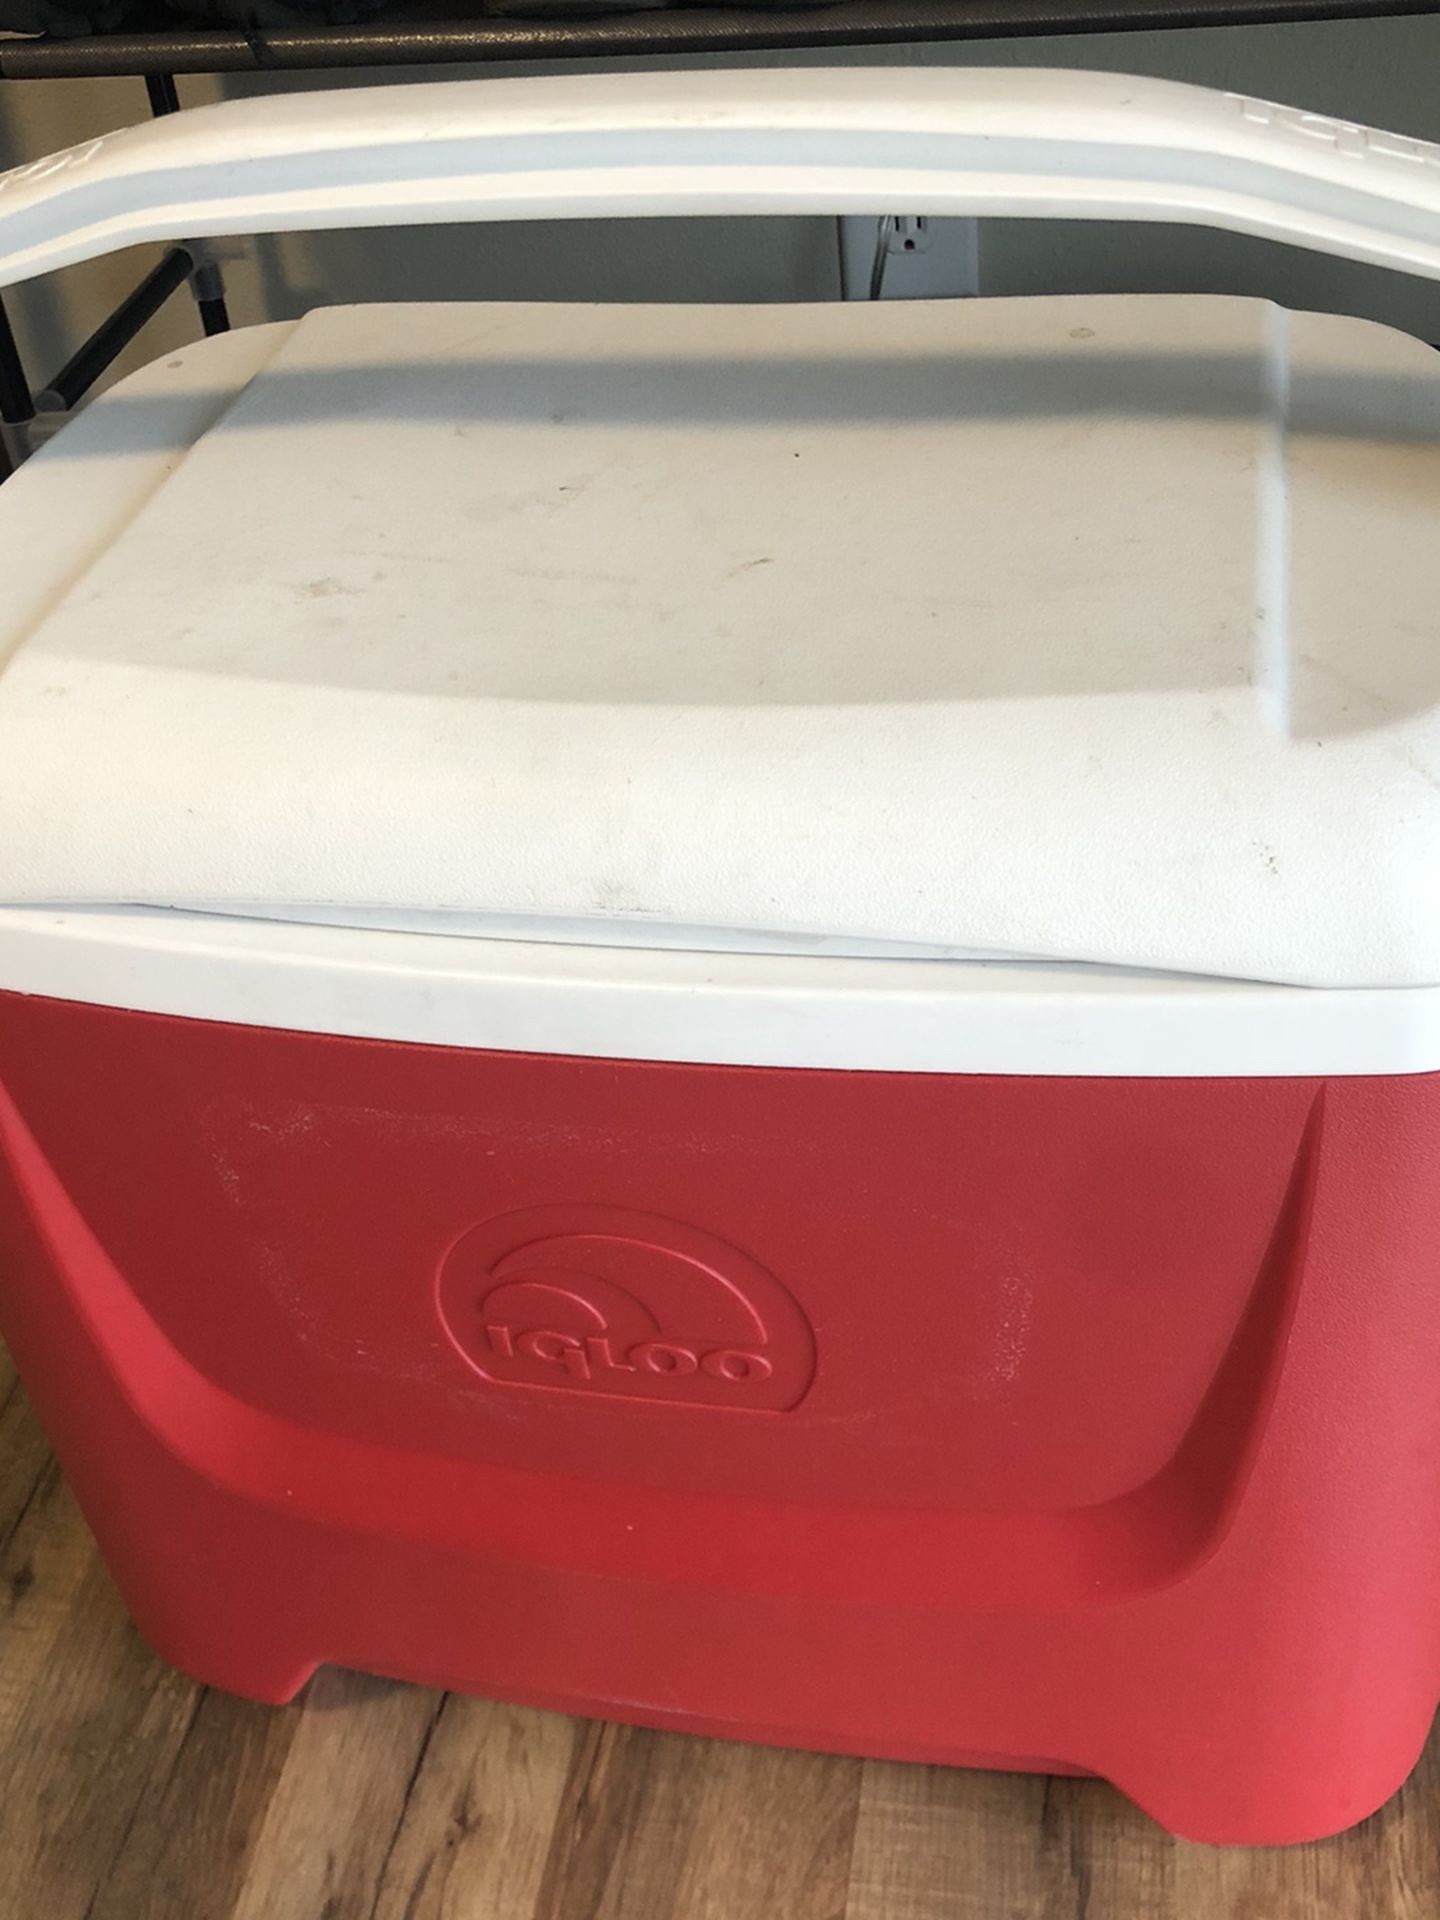 Igloo Water Cooler [26L or 28 Qt]